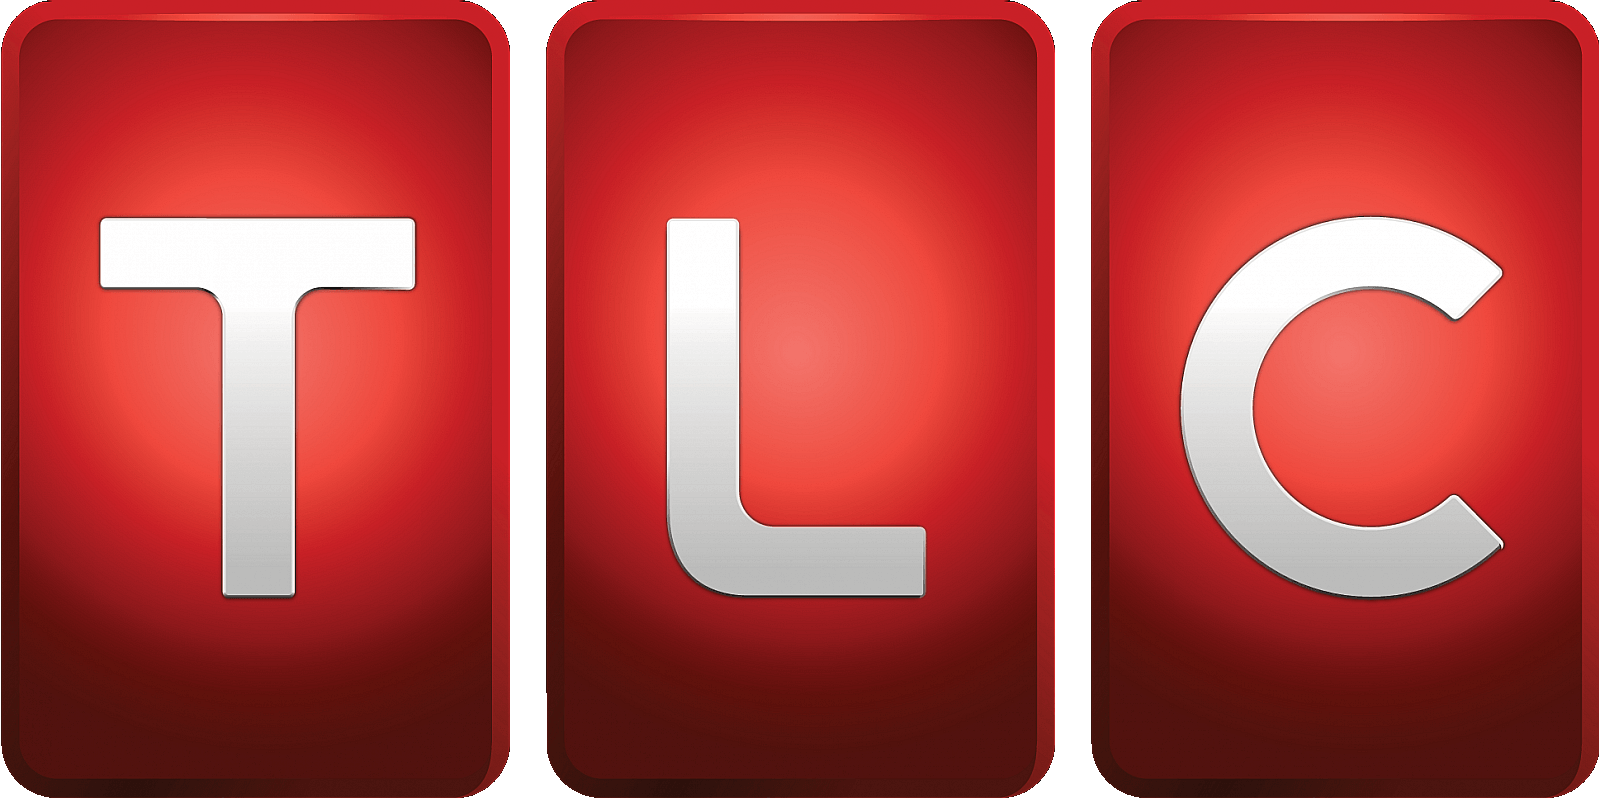 TLC Logo - Image - TLC logo 2011.png | Logopedia | FANDOM powered by Wikia